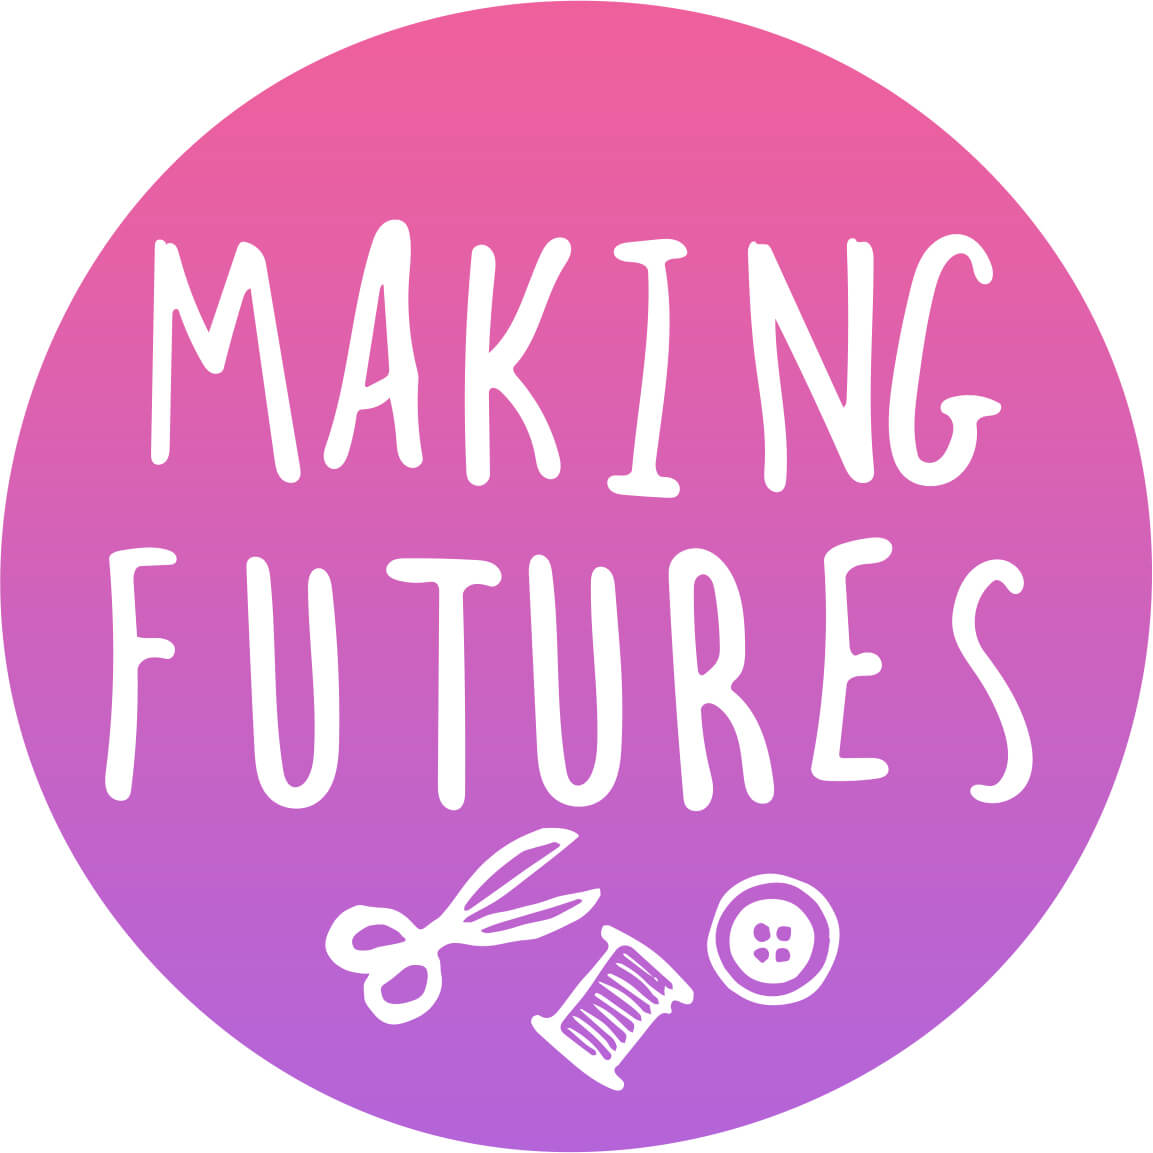 making futures stitch and sew logo